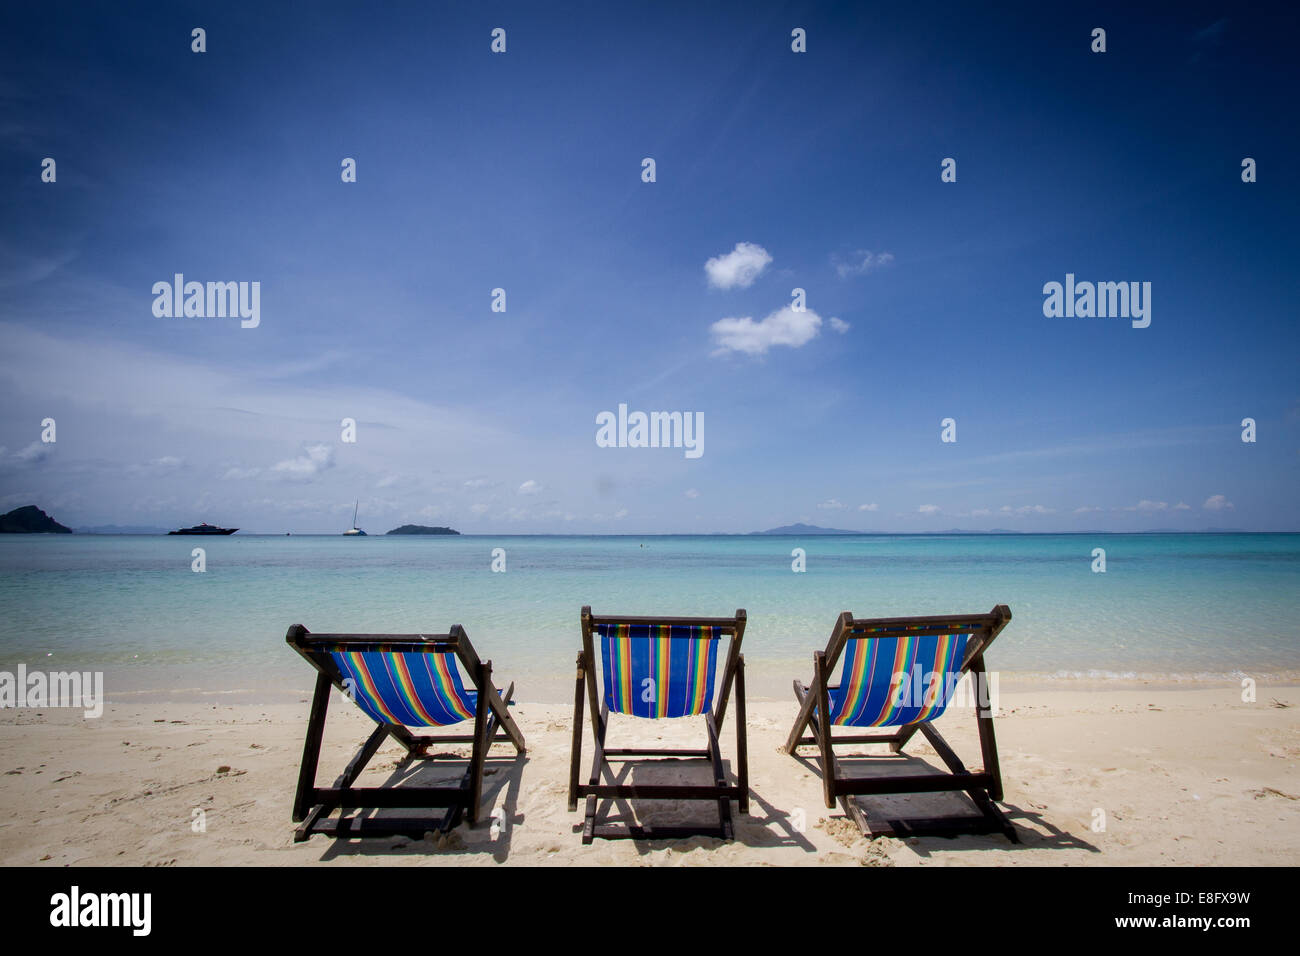 Three deck chairs in a row on the beach, Phuket, Thailand Stock Photo